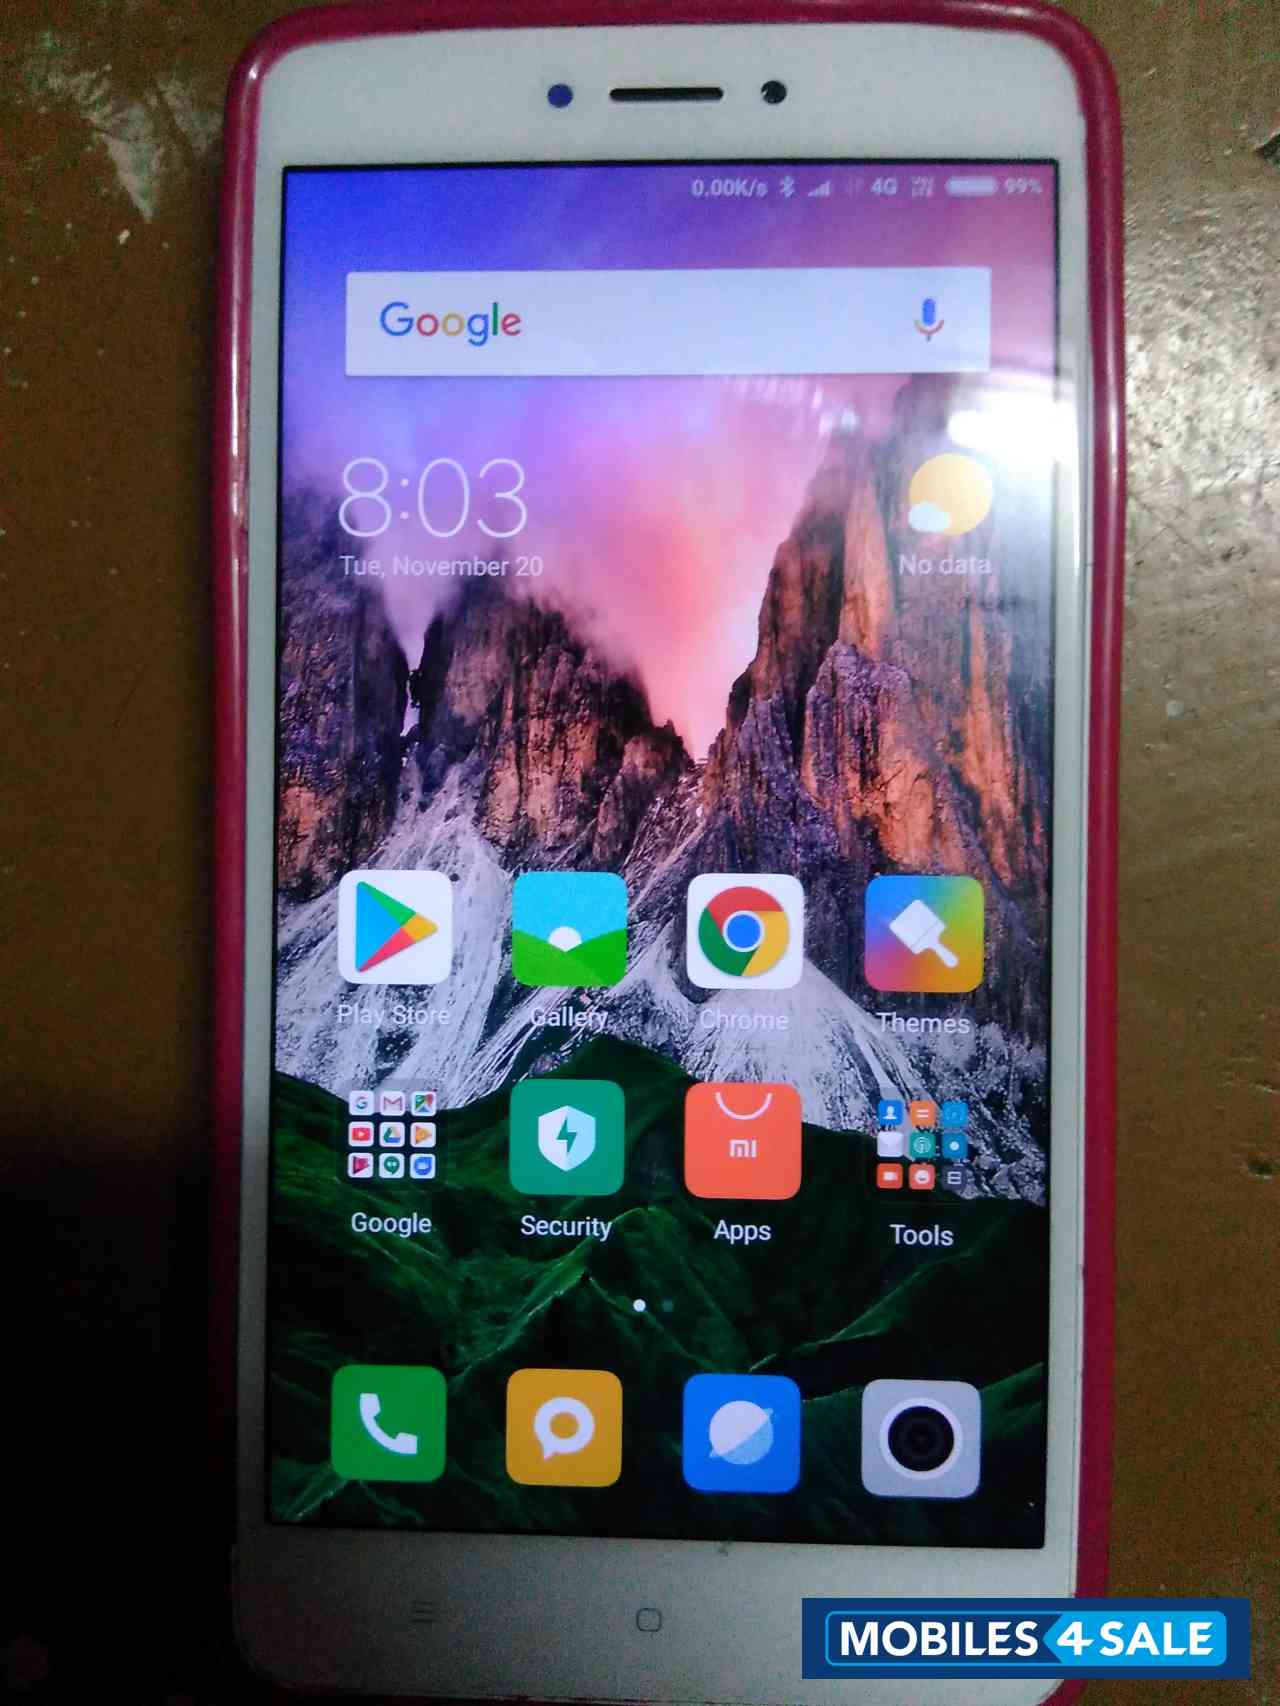 White Xiaomi Redmi Note 4